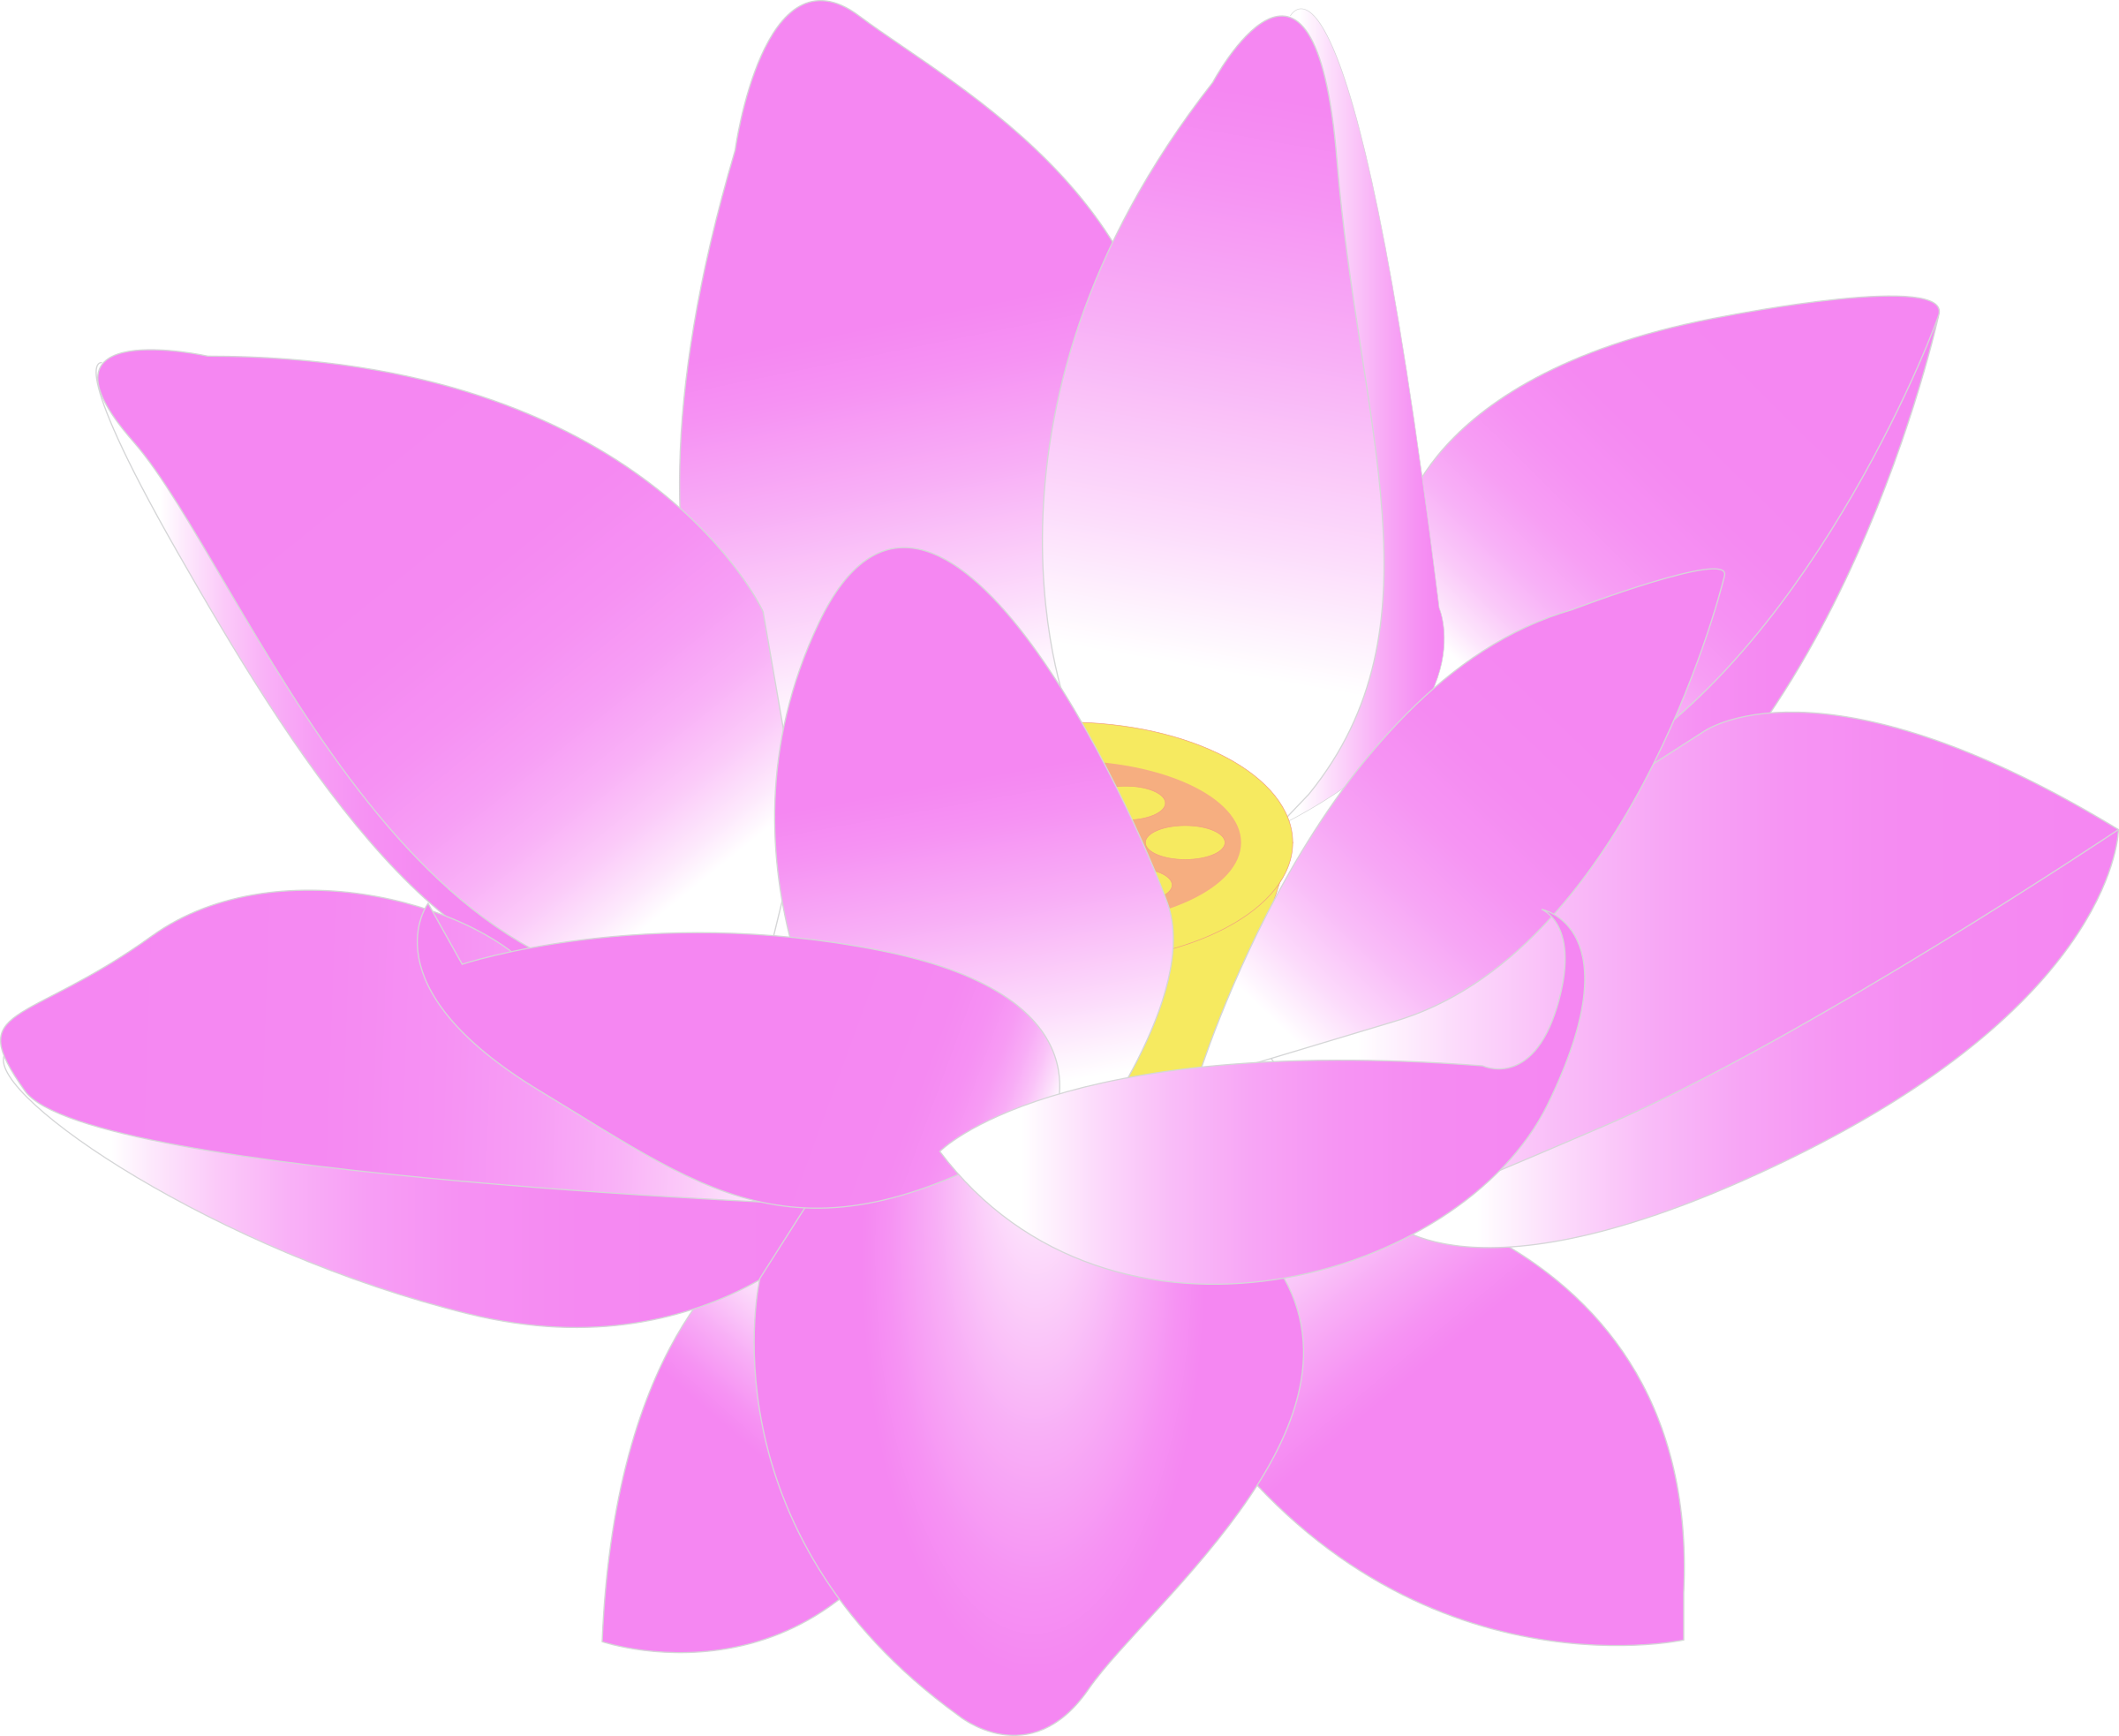 Blossom big image png. Lotus clipart lotus chinese